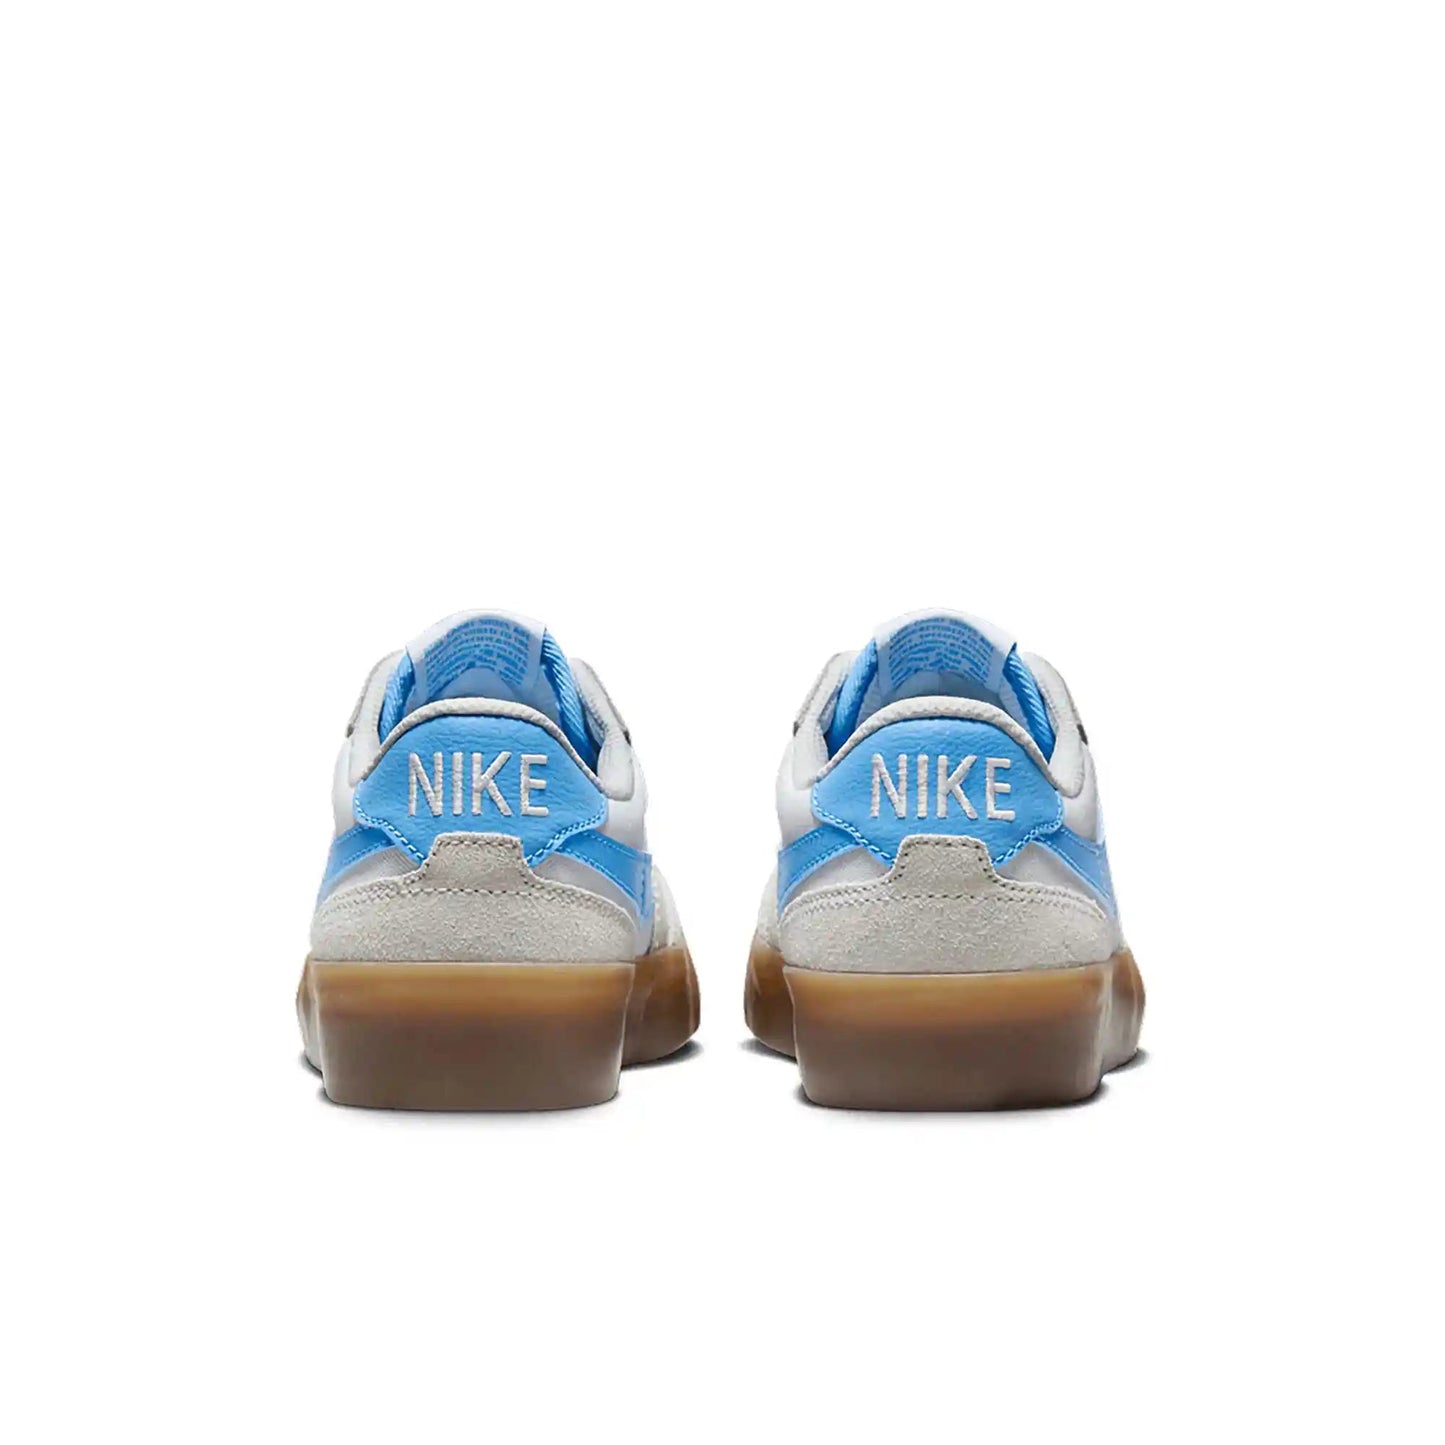 Nike SB Pogo, summit white/university blue-white - Tiki Room Skateboards - 4